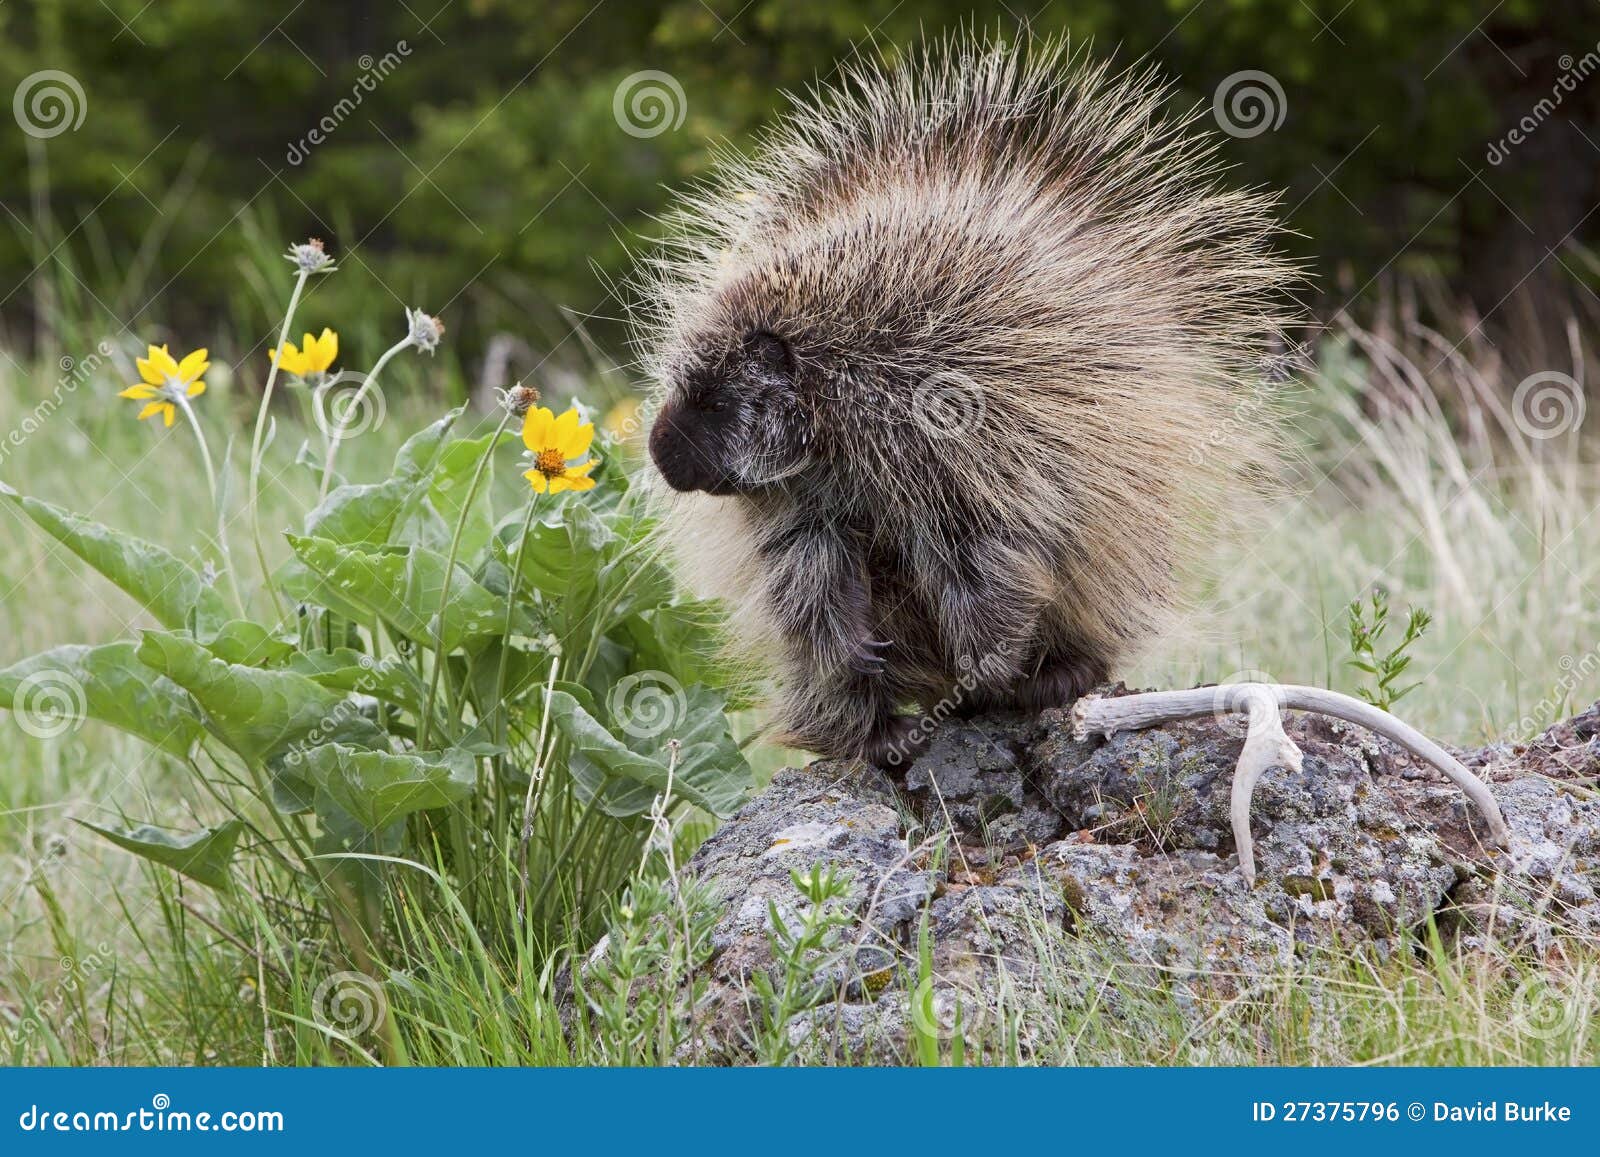 american porcupine quills defense wildlife